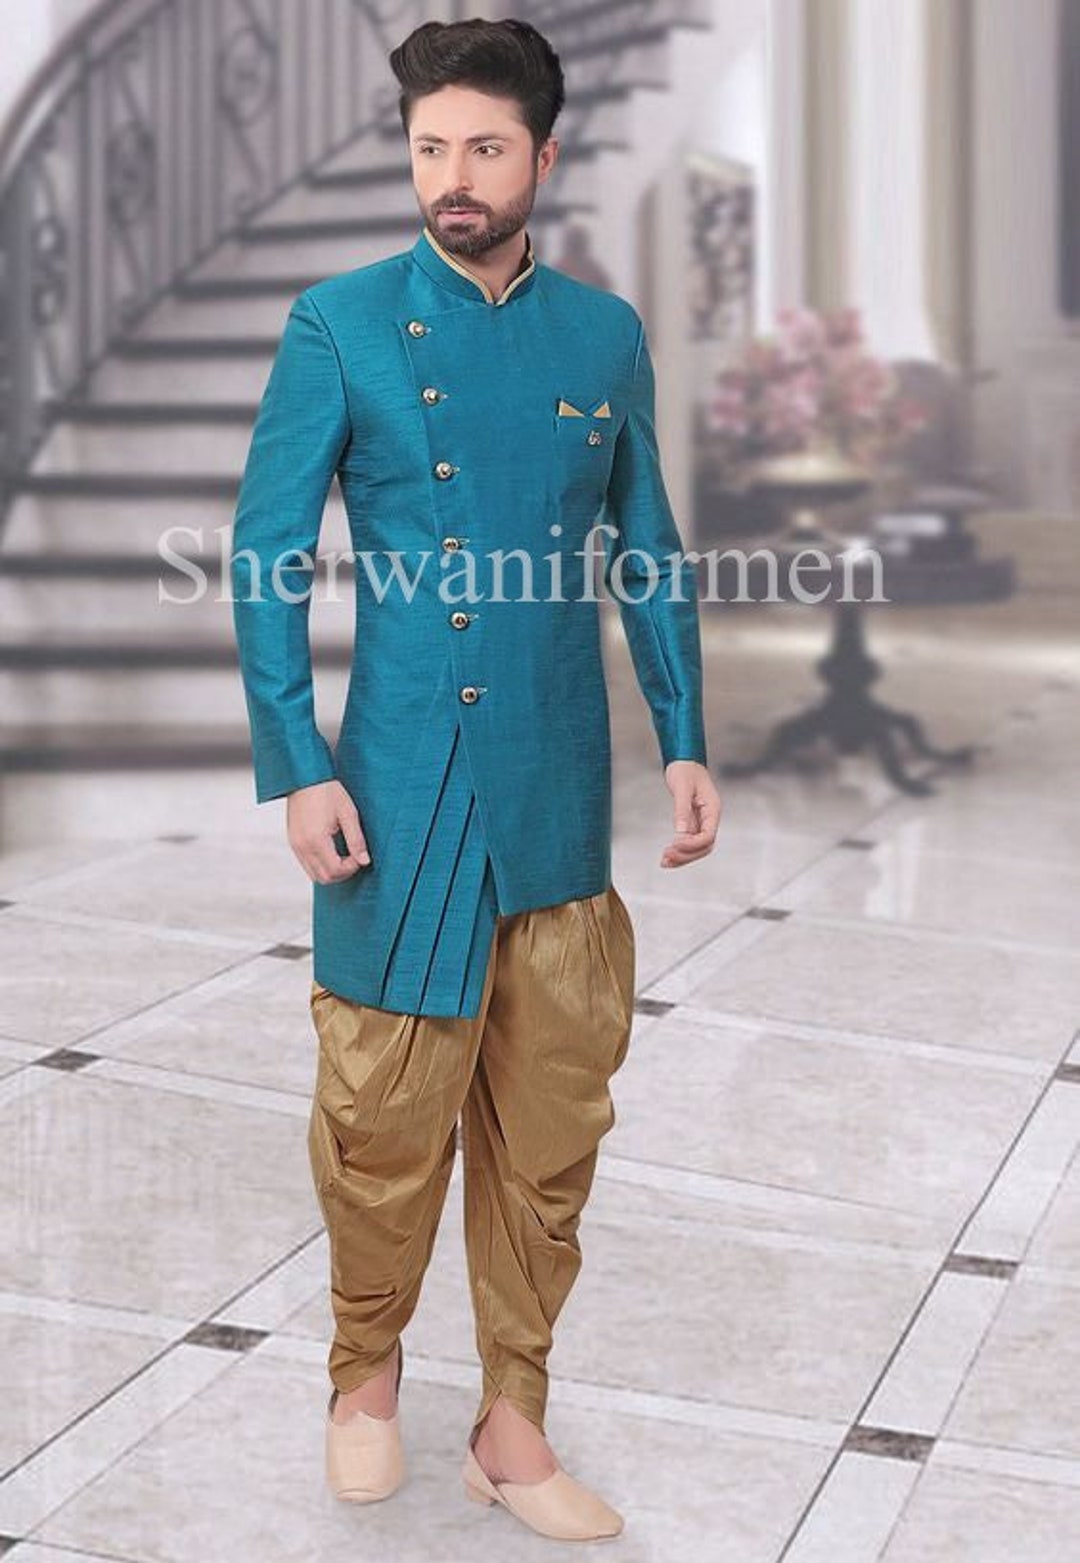 Sherwani for Man Jodhpuri Achkan Bandhgala Suit Kurta Top - Etsy